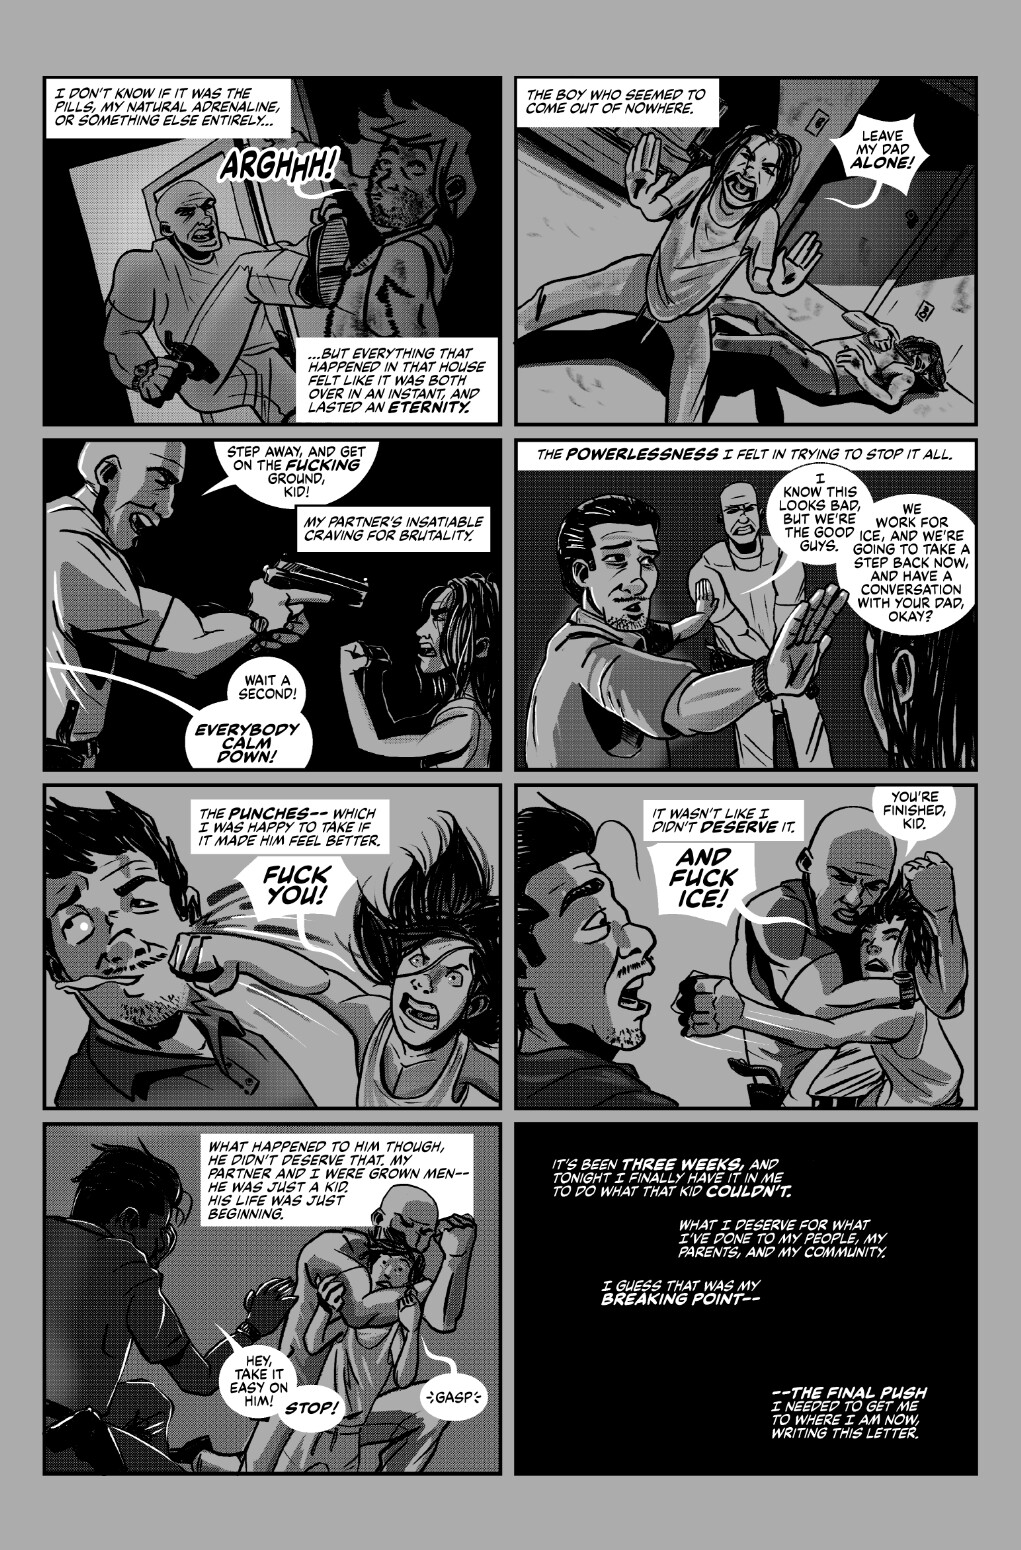 Sincerely, Agent Mejía: Page 9